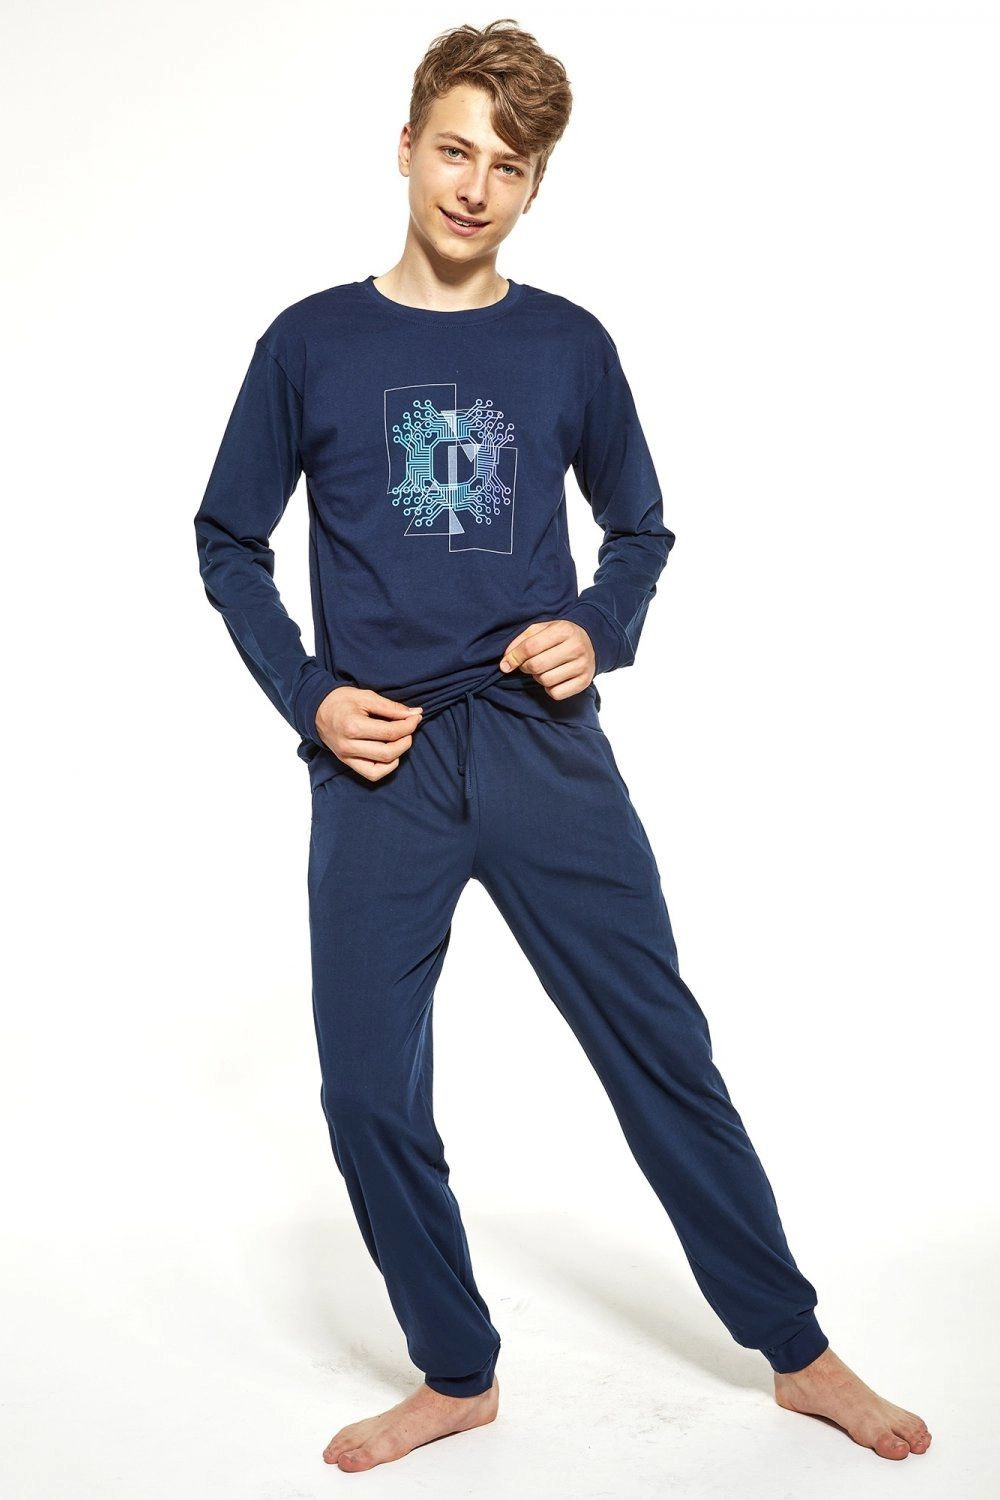 Chlapecké pyžamo 998/42 Chip - CORNETTE Barva: tmavě modrá, Velikost: 188/XL